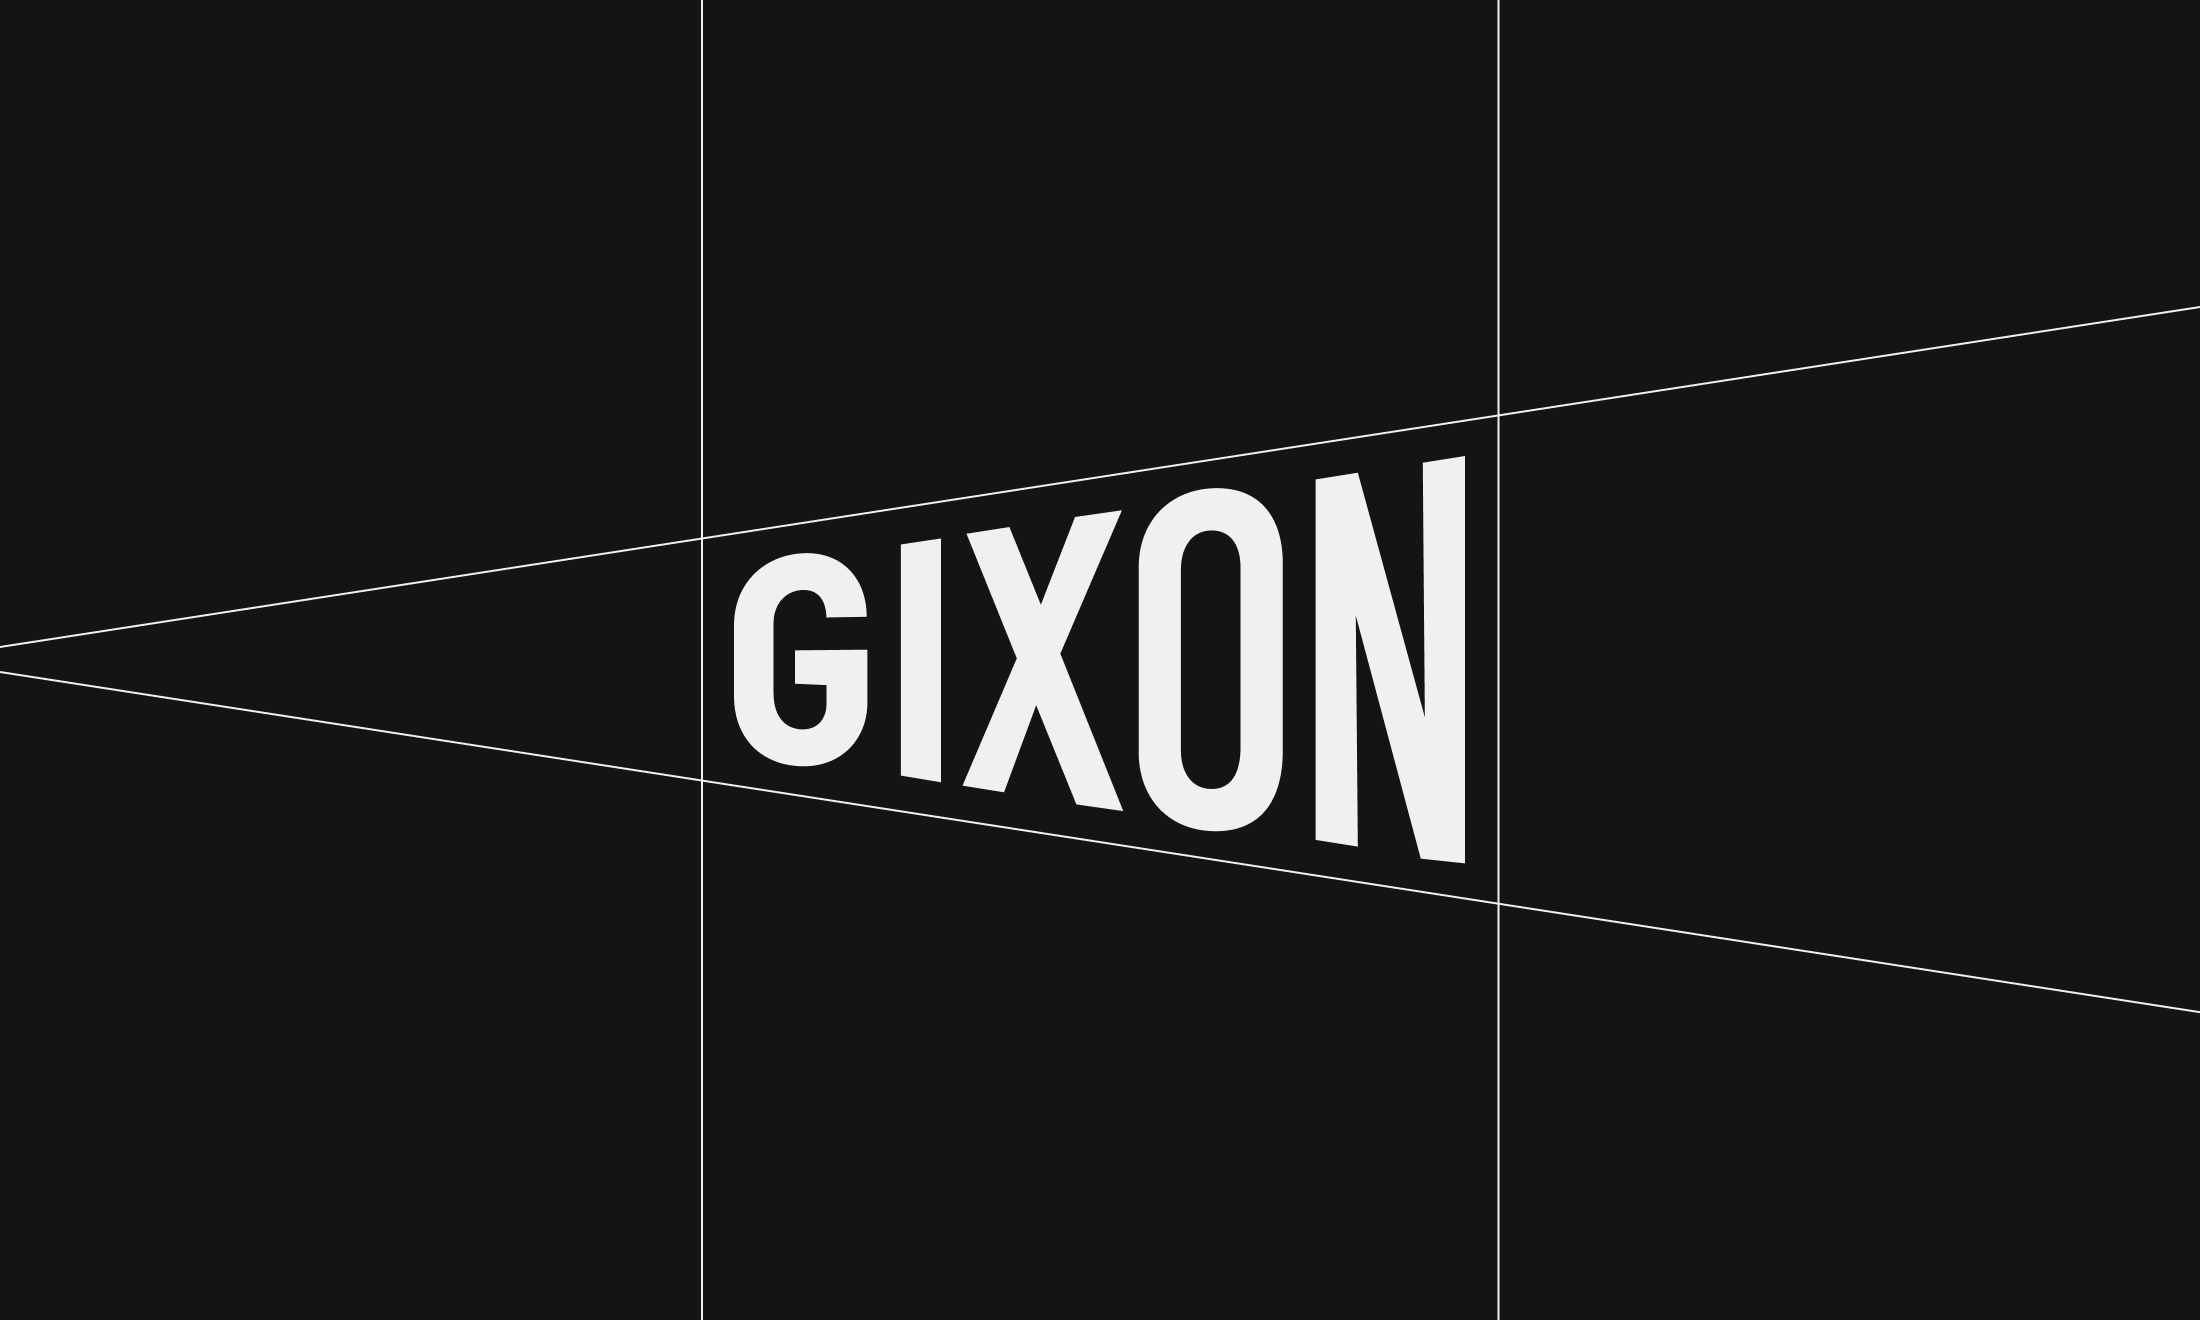 Gixon logotype construction